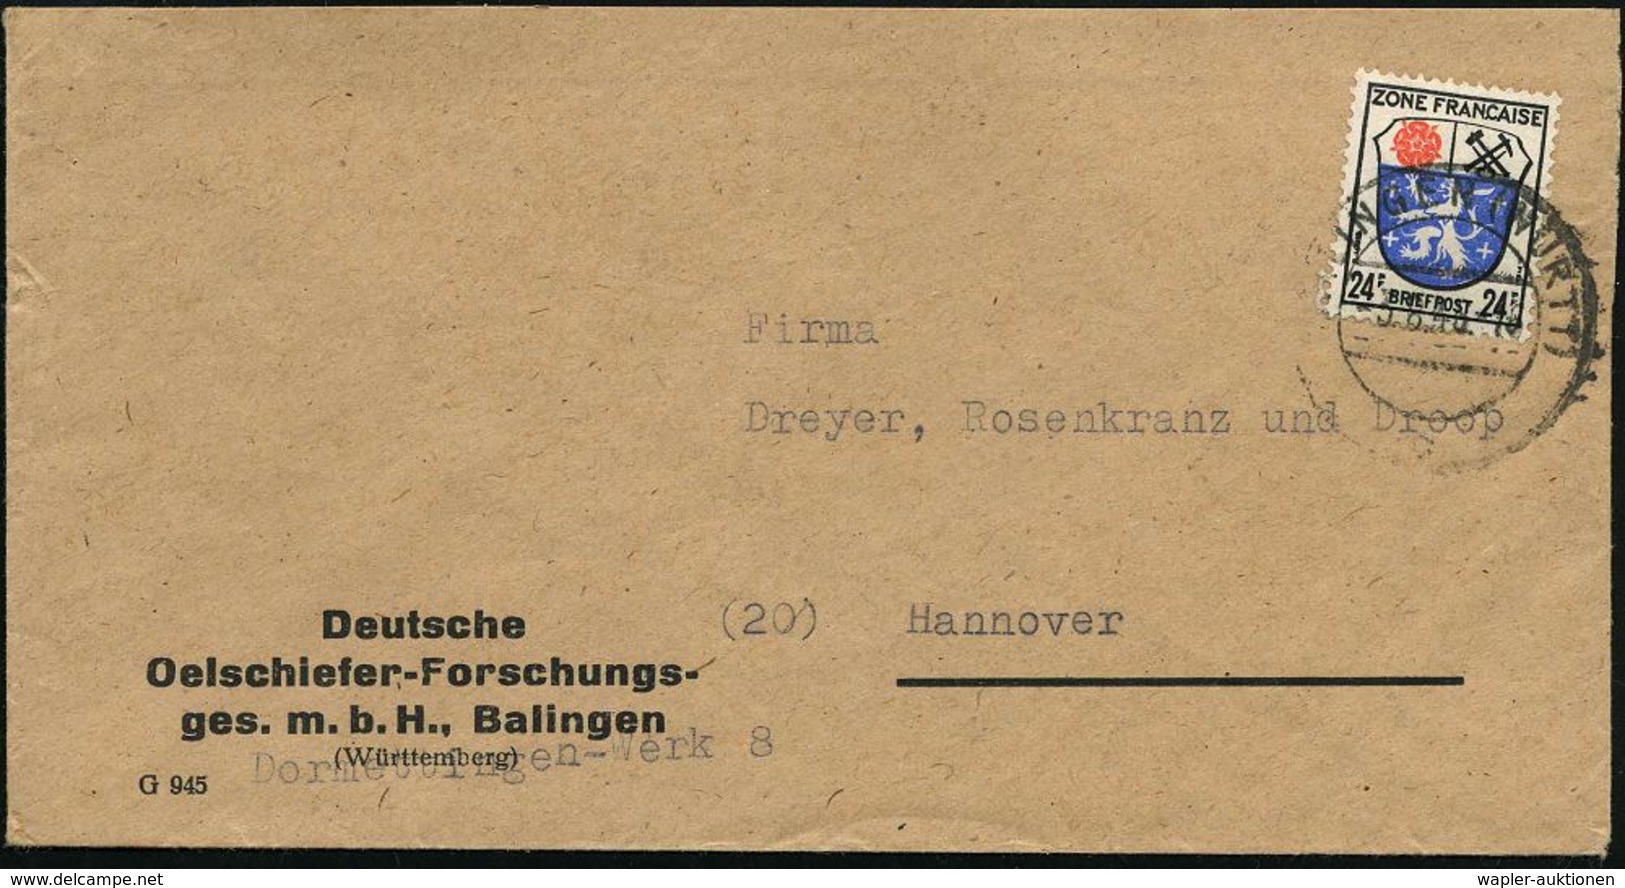 ERDÖL / PROSPEKTIERUNG & GEWINNUNG : BALINGEN (WÜRTT)/ C 1946 (3.8.) 2-Steg Auf Firmen-Bf.: Deutsches Oelschiefer-Forsch - Pétrole